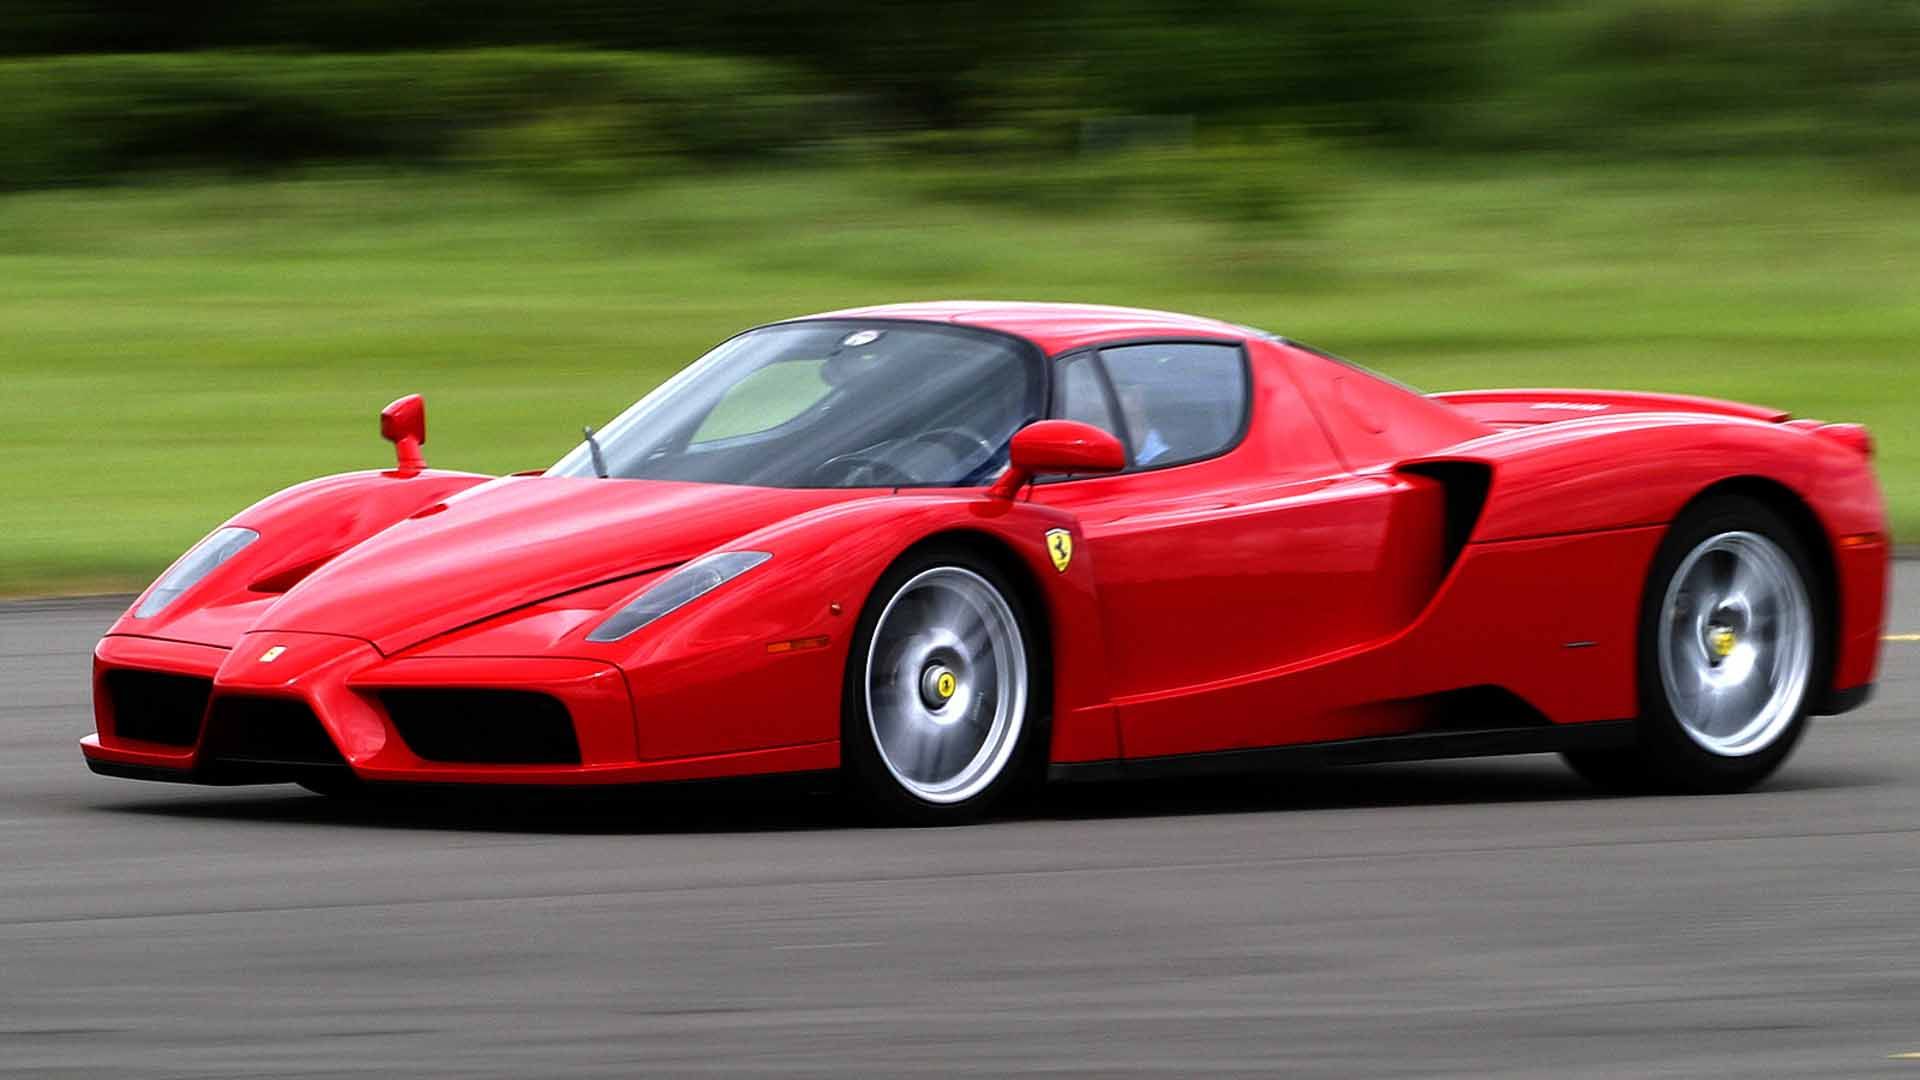 The Ferrari Enzo is a legendary supercar.